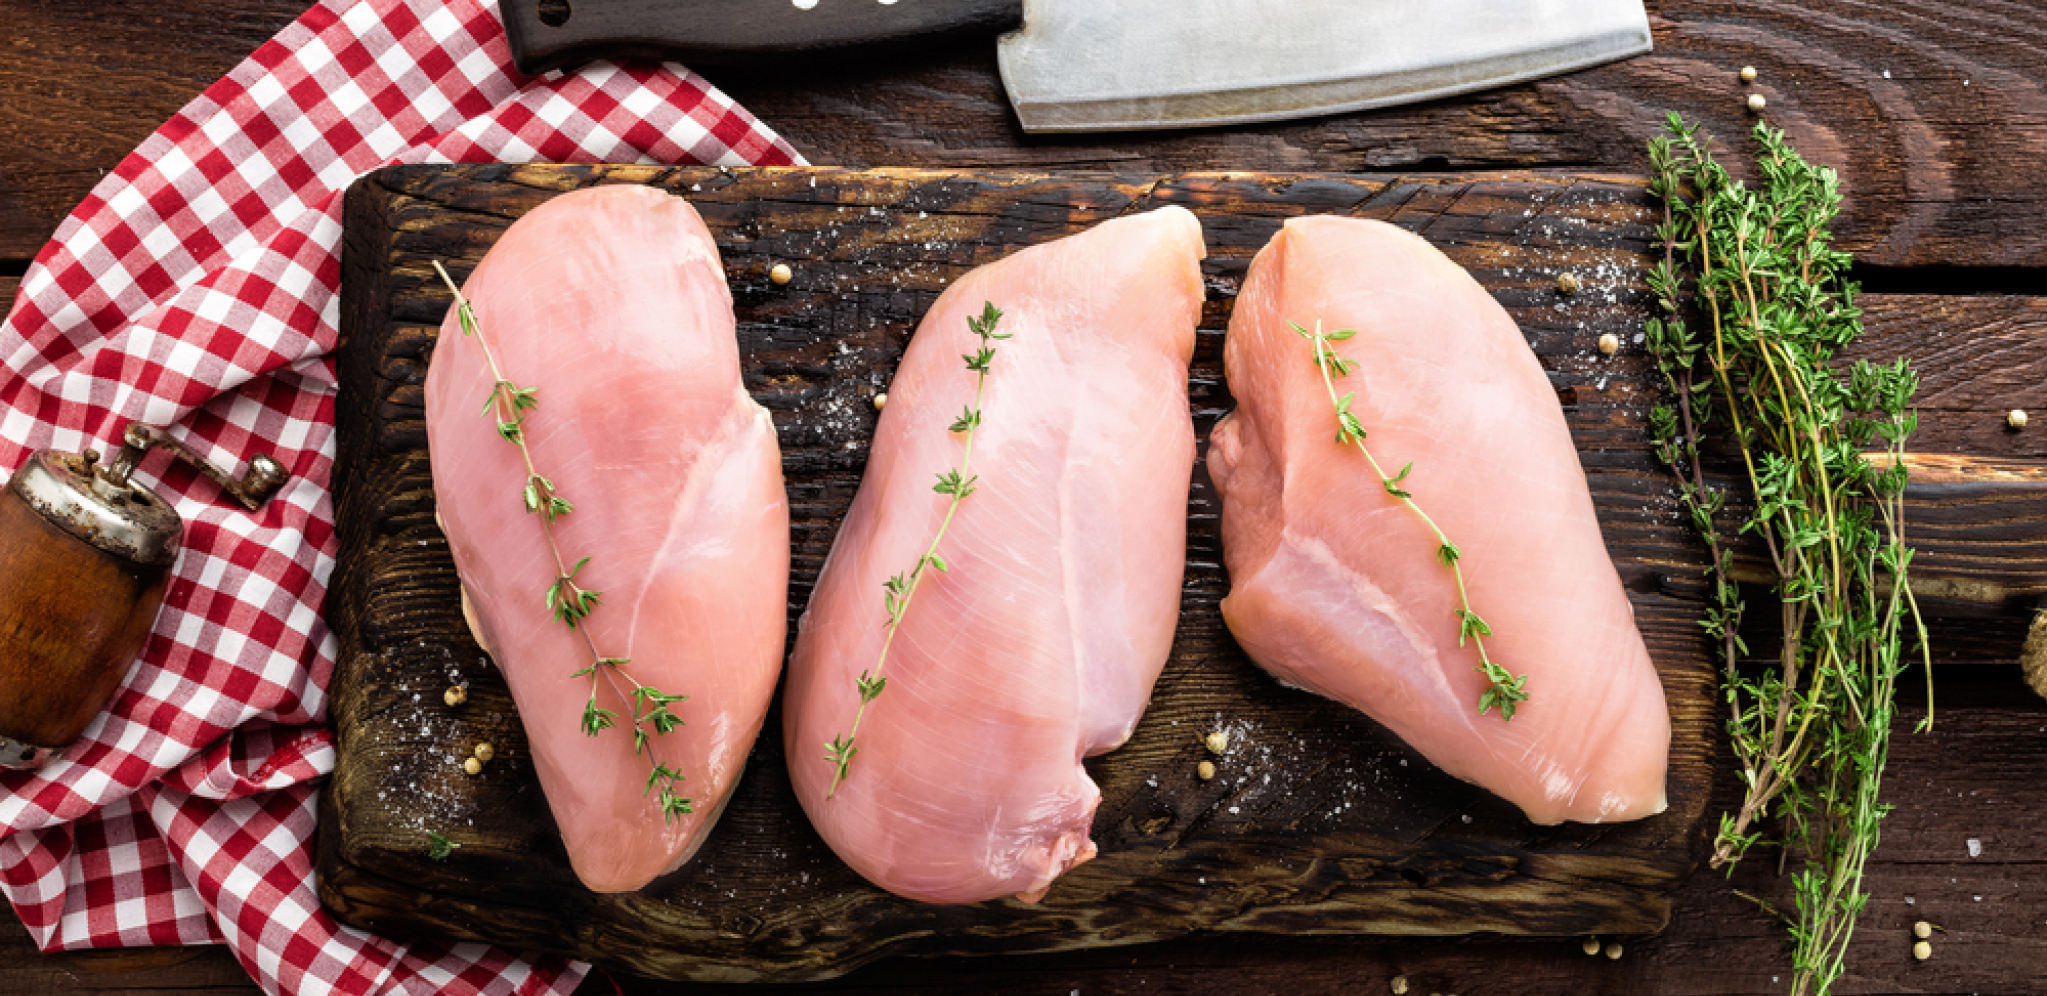 Hrskava i sočna: Recept za pohovanu piletinu